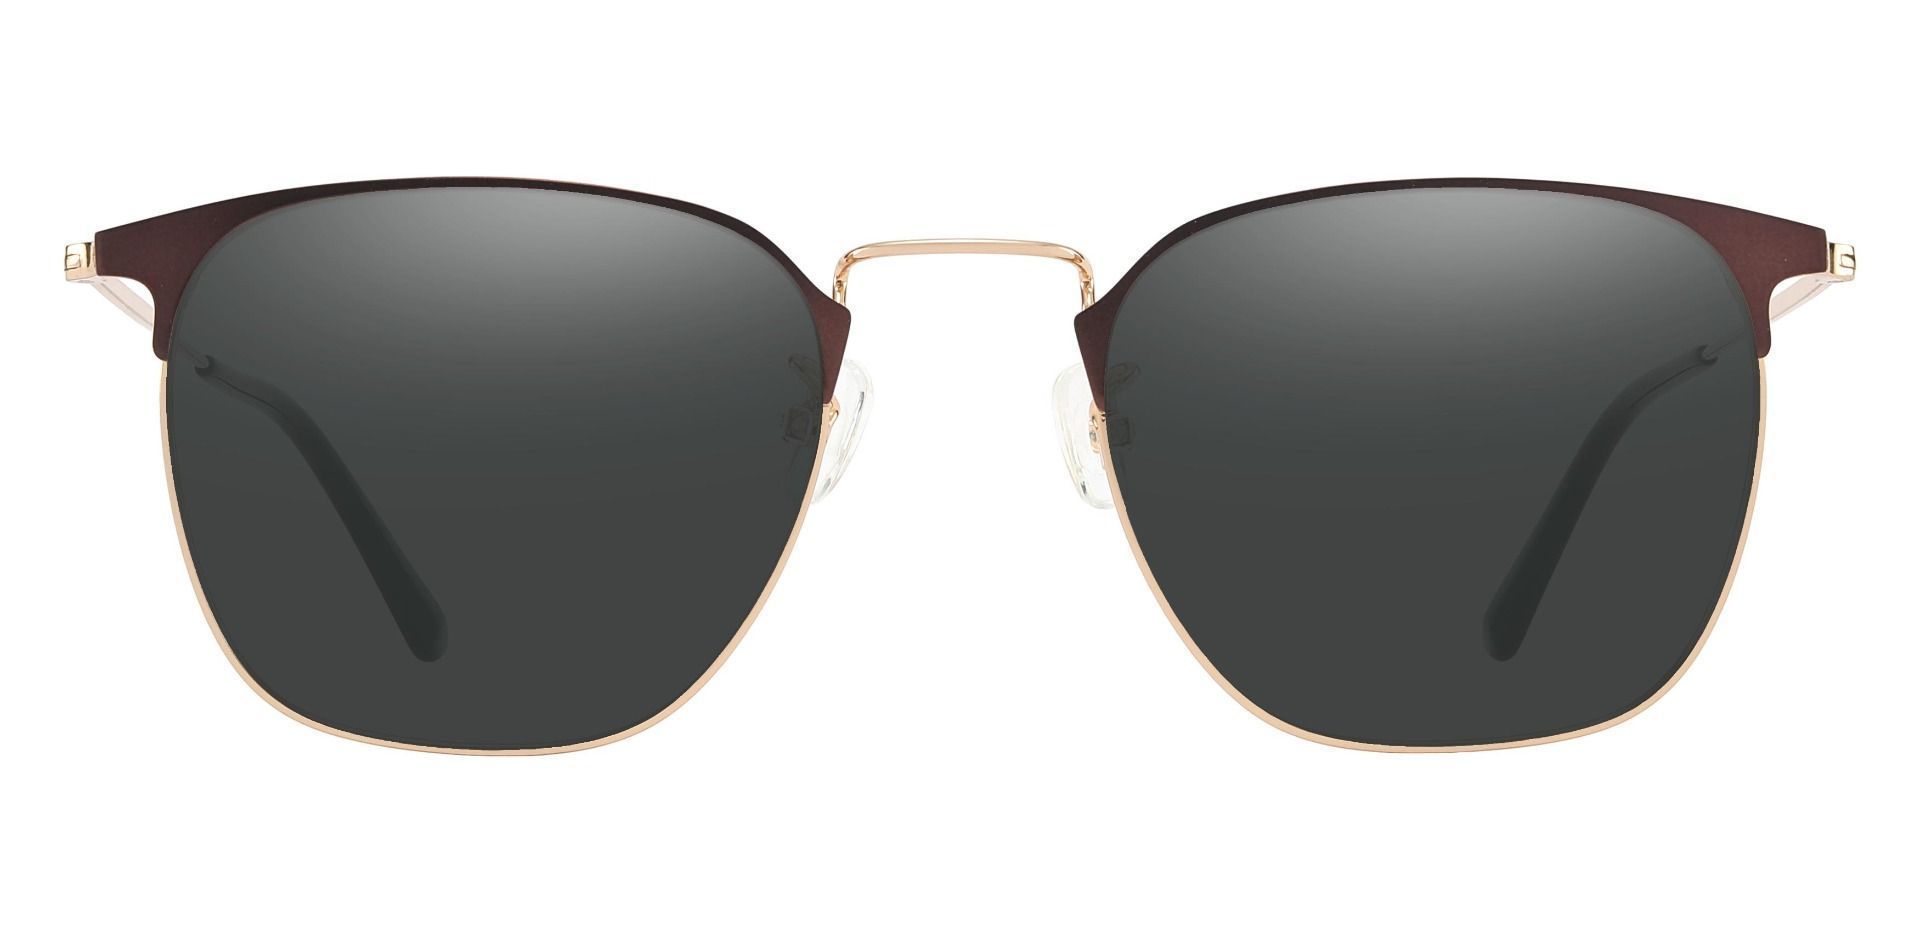 Nichols Browline Prescription Sunglasses - Brown Frame With Gray Lenses